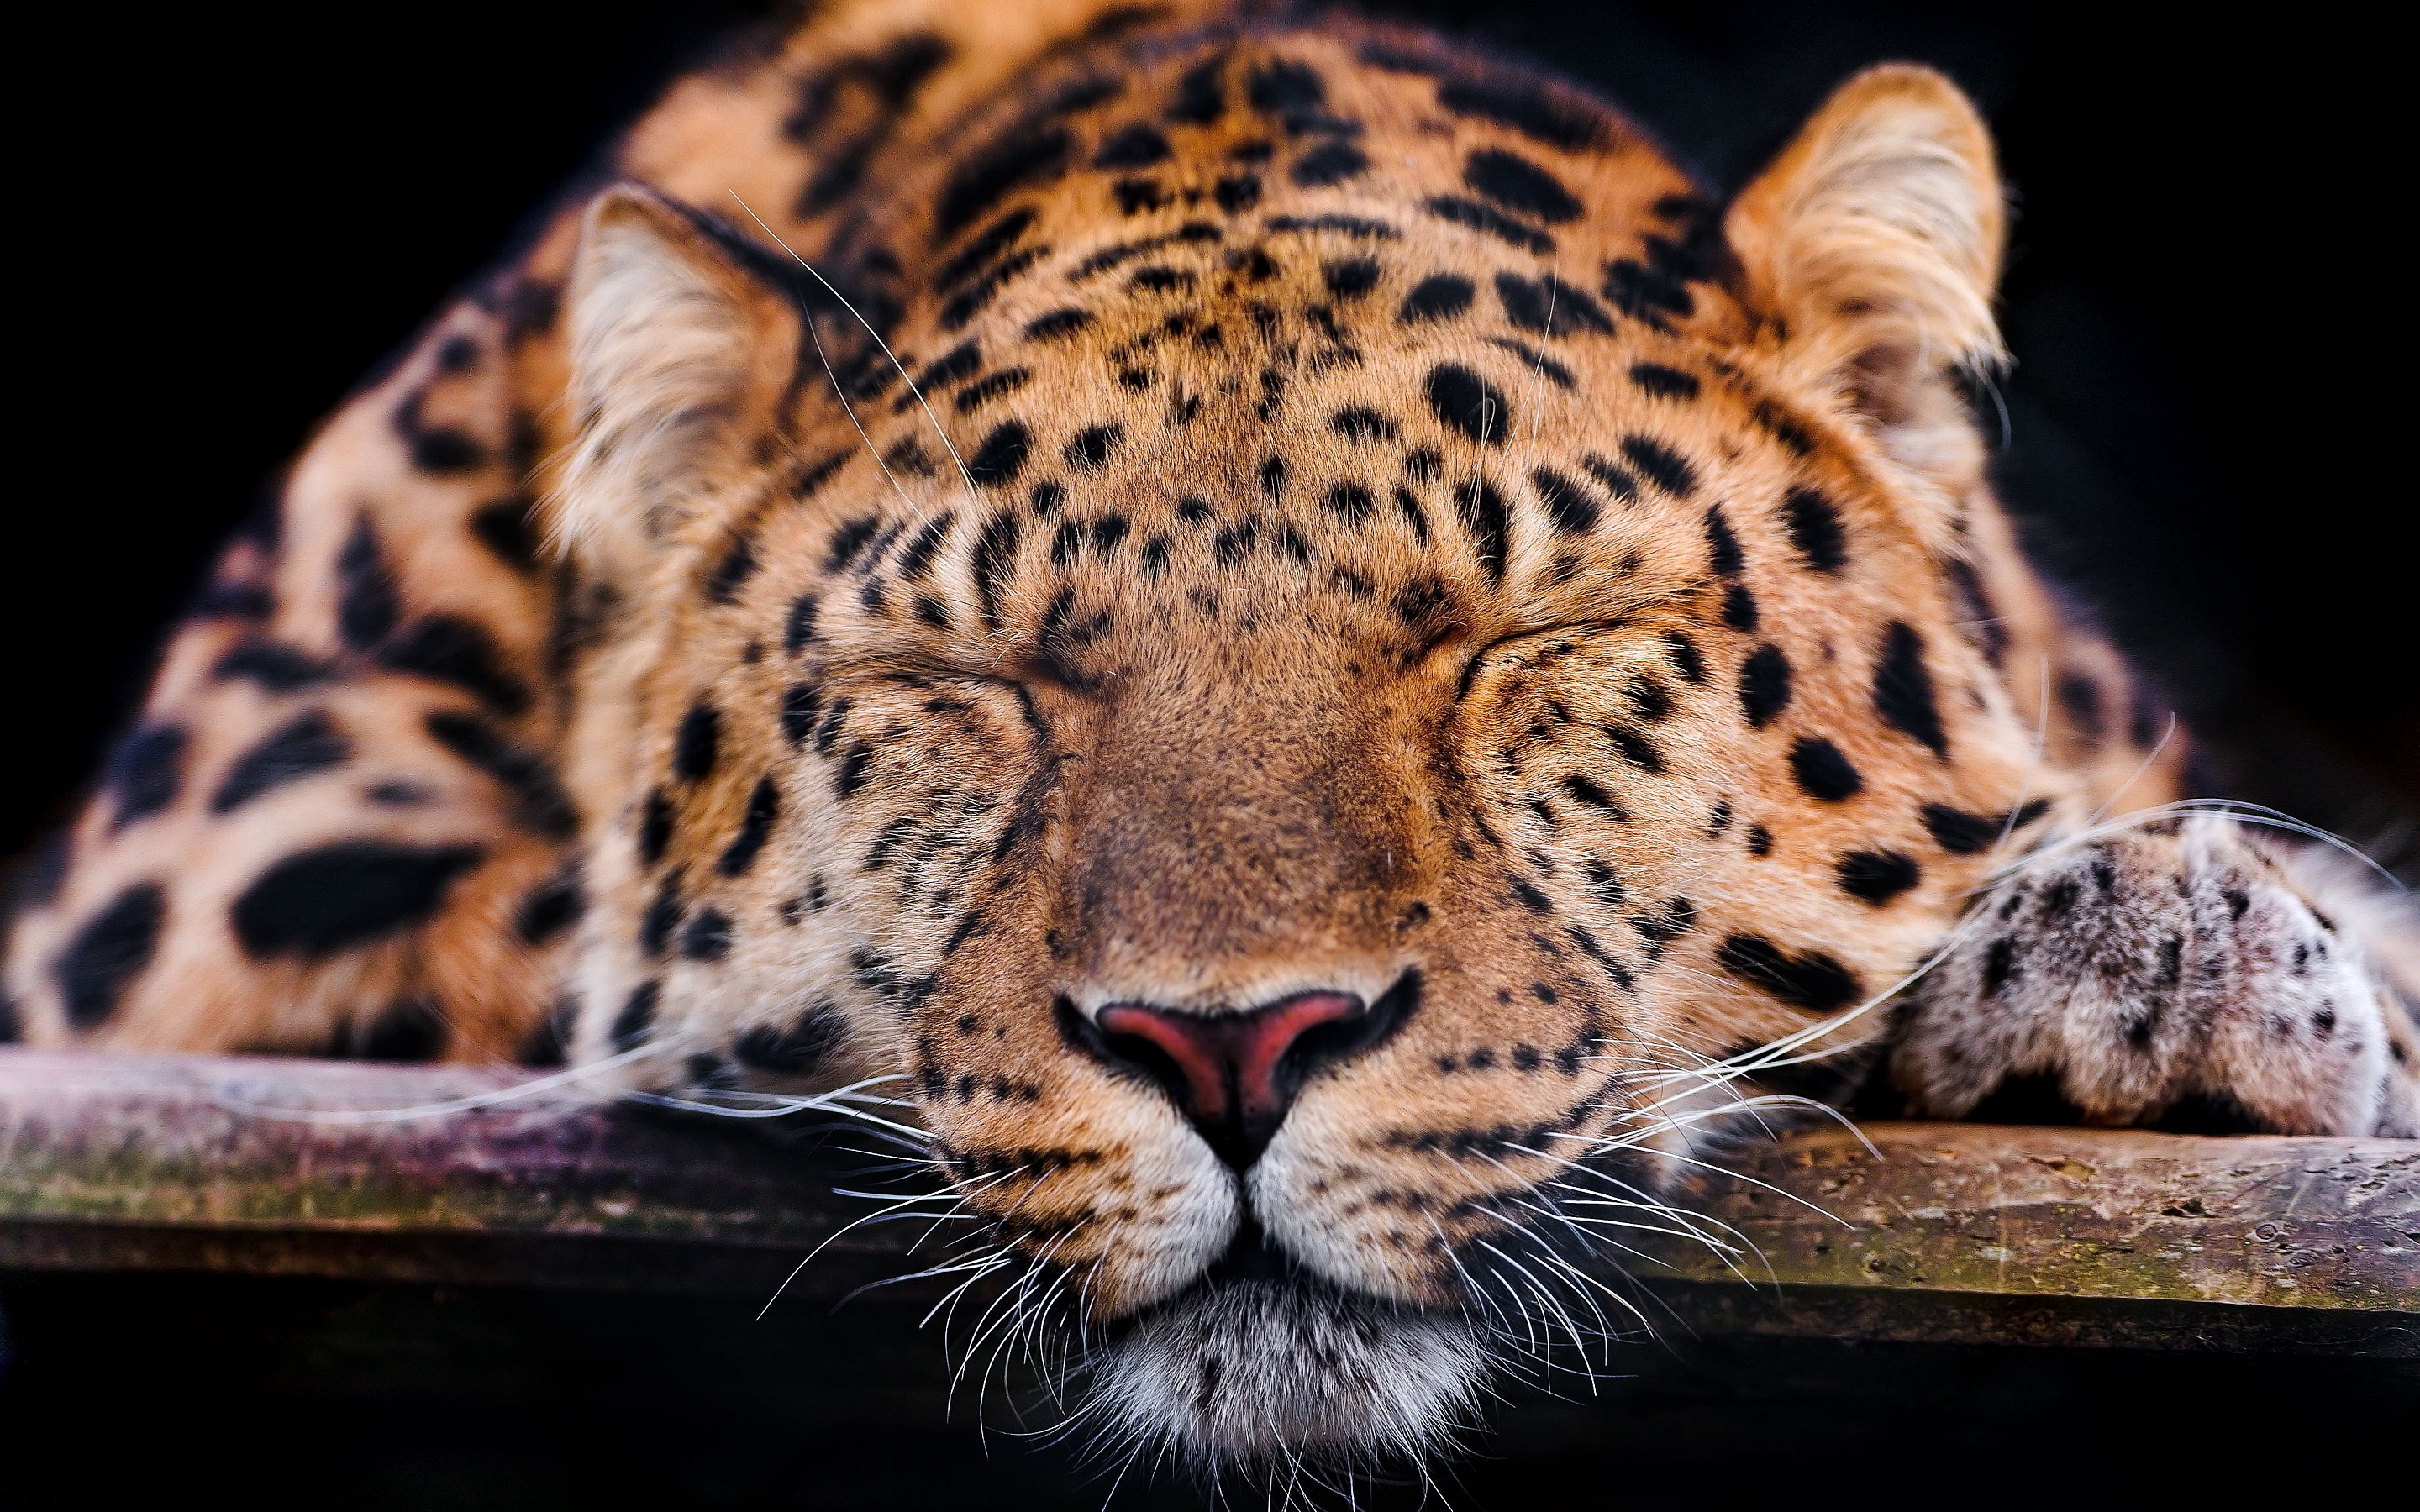 Sleepy leopard